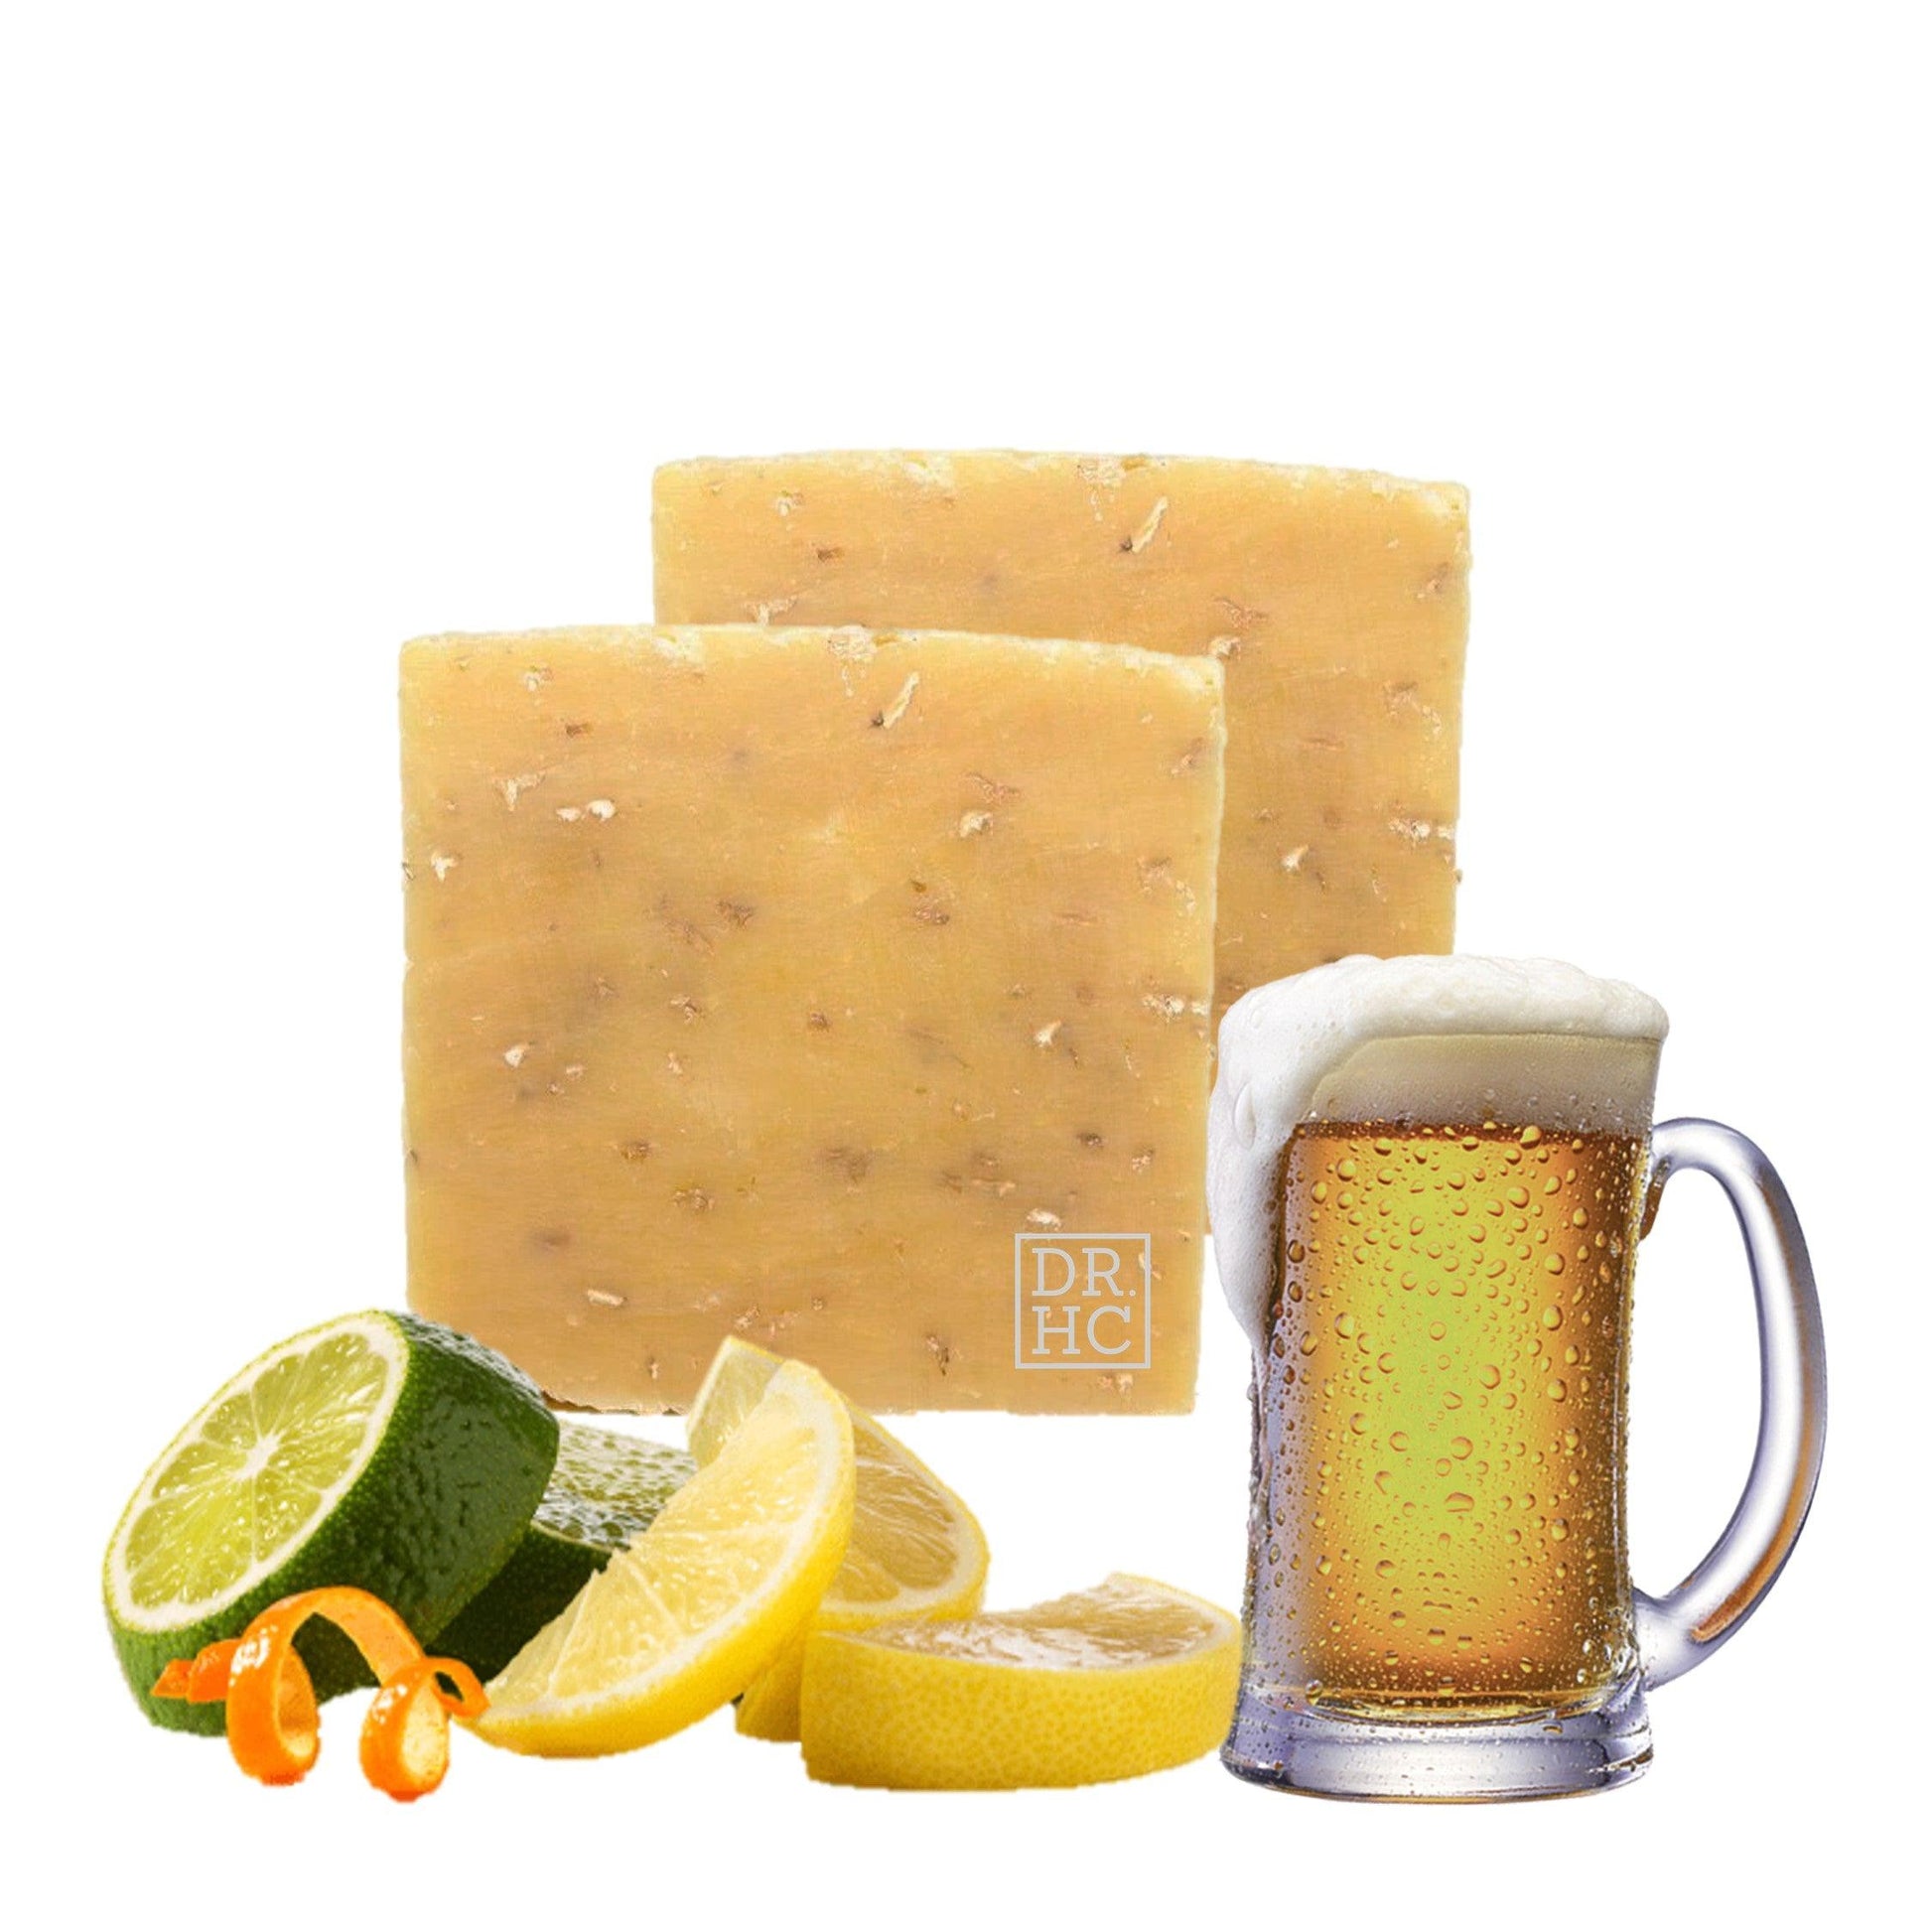 DR.HC All-Natural Skincare Face Soap - Citrus Beer (110g, 3.8oz.) (Anti-aging, Skin brightening, Anti-blemish, Exfoliating...)-3